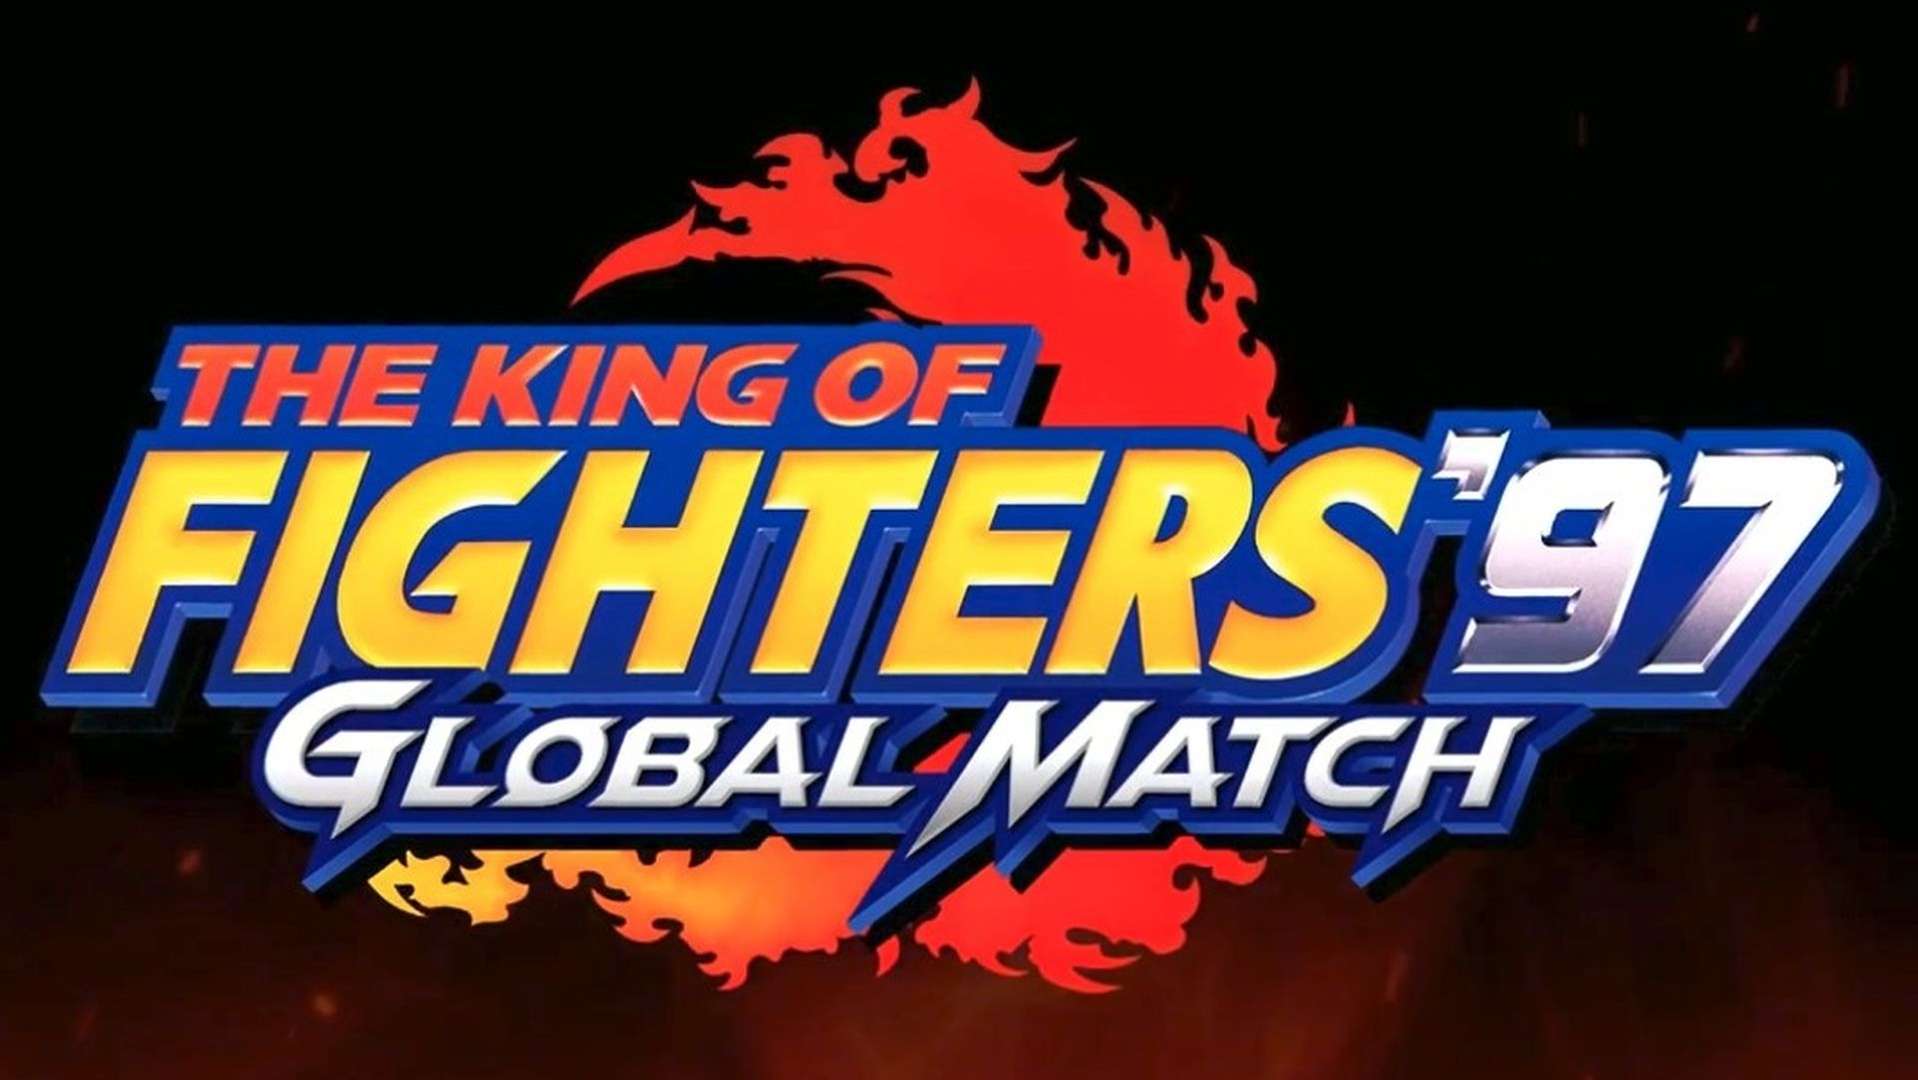 The King Of Fighters 97 Global Match estará disponible para PS4 y PSVita en abril